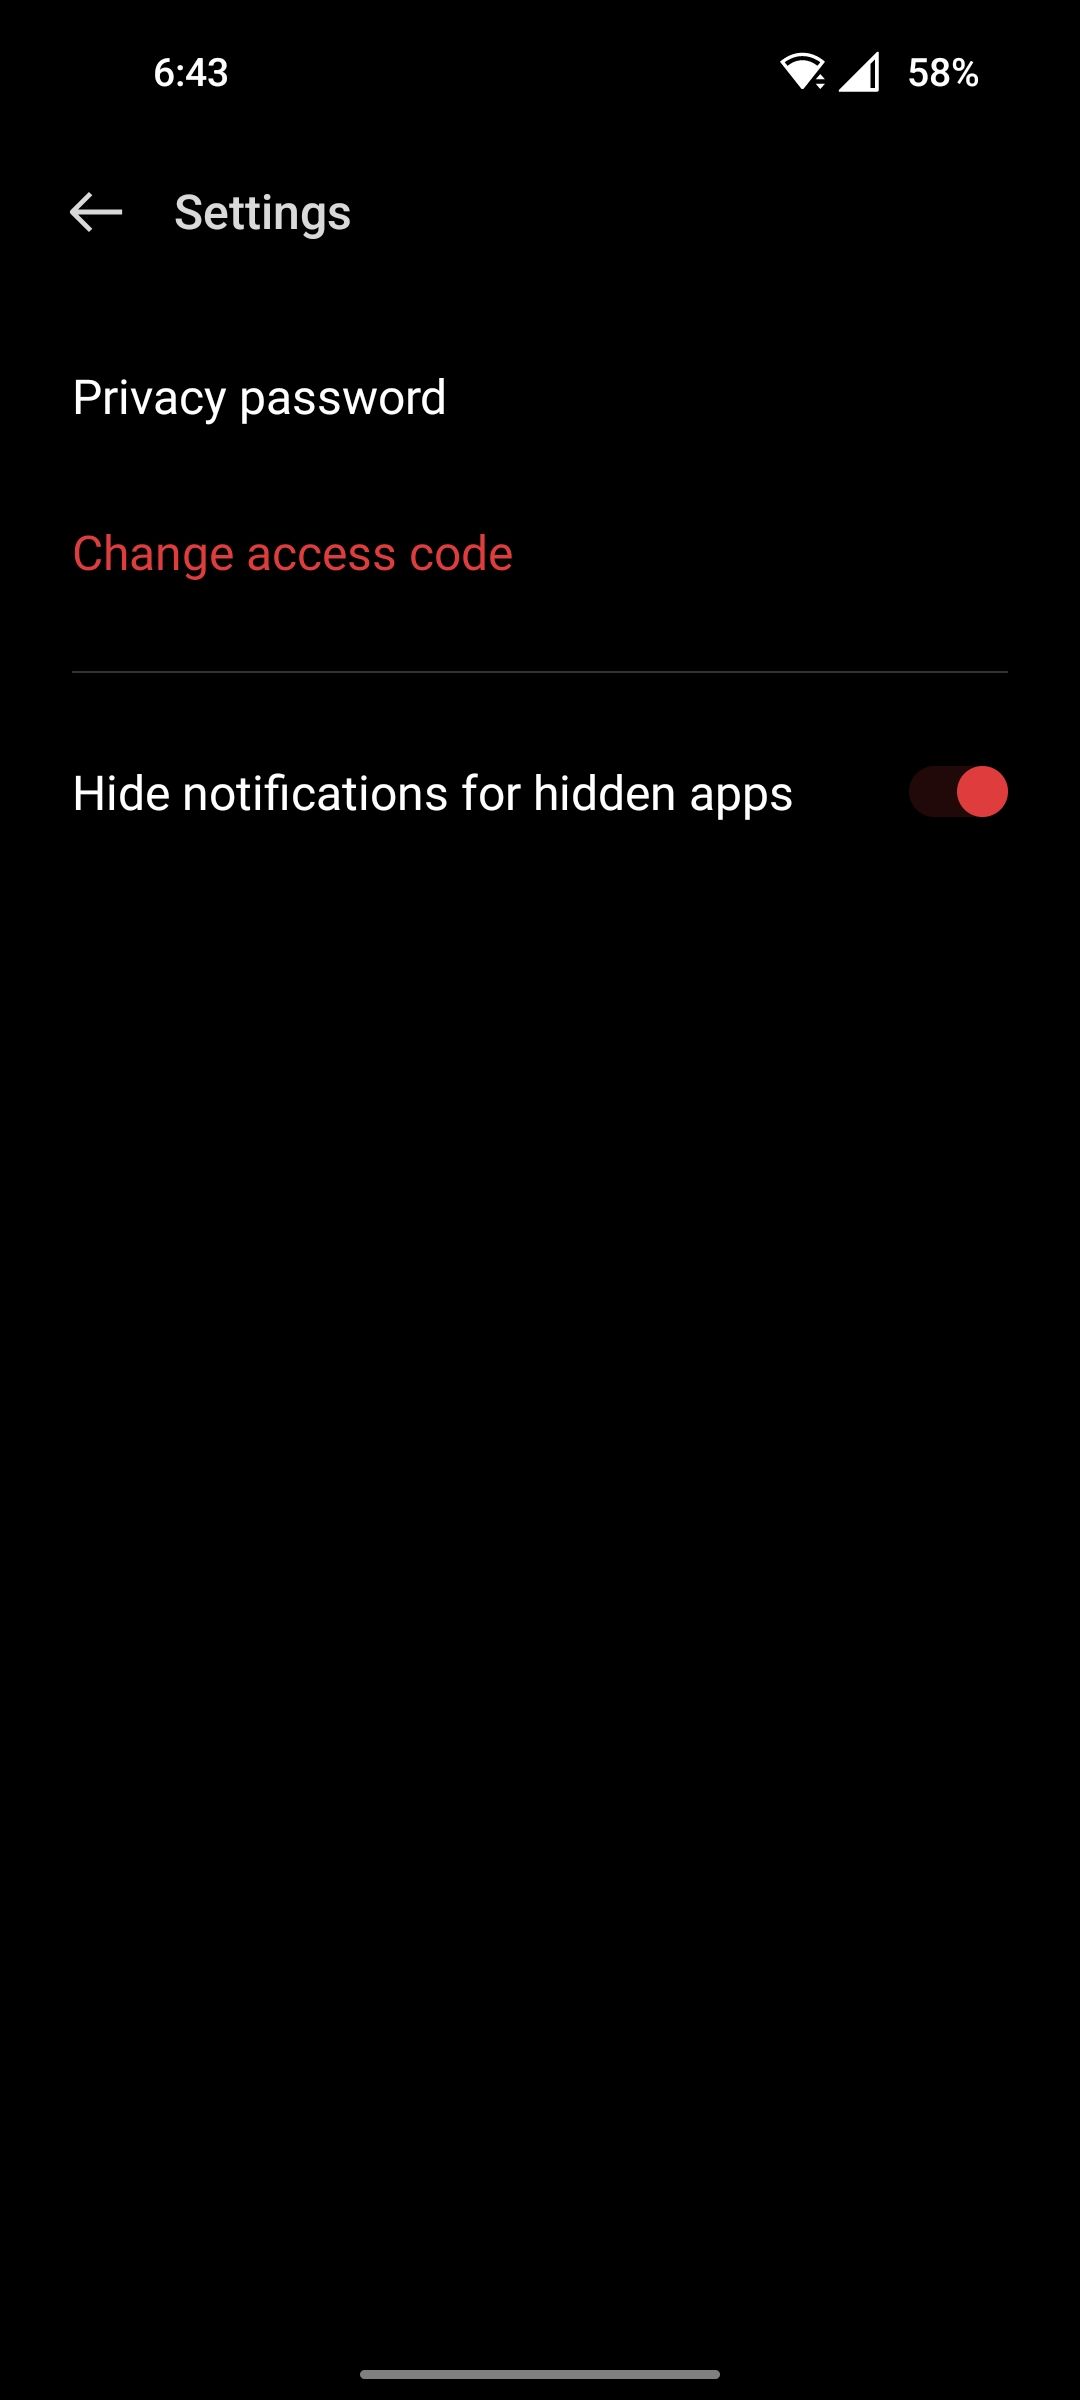 Option to hide notifications for hidden apps